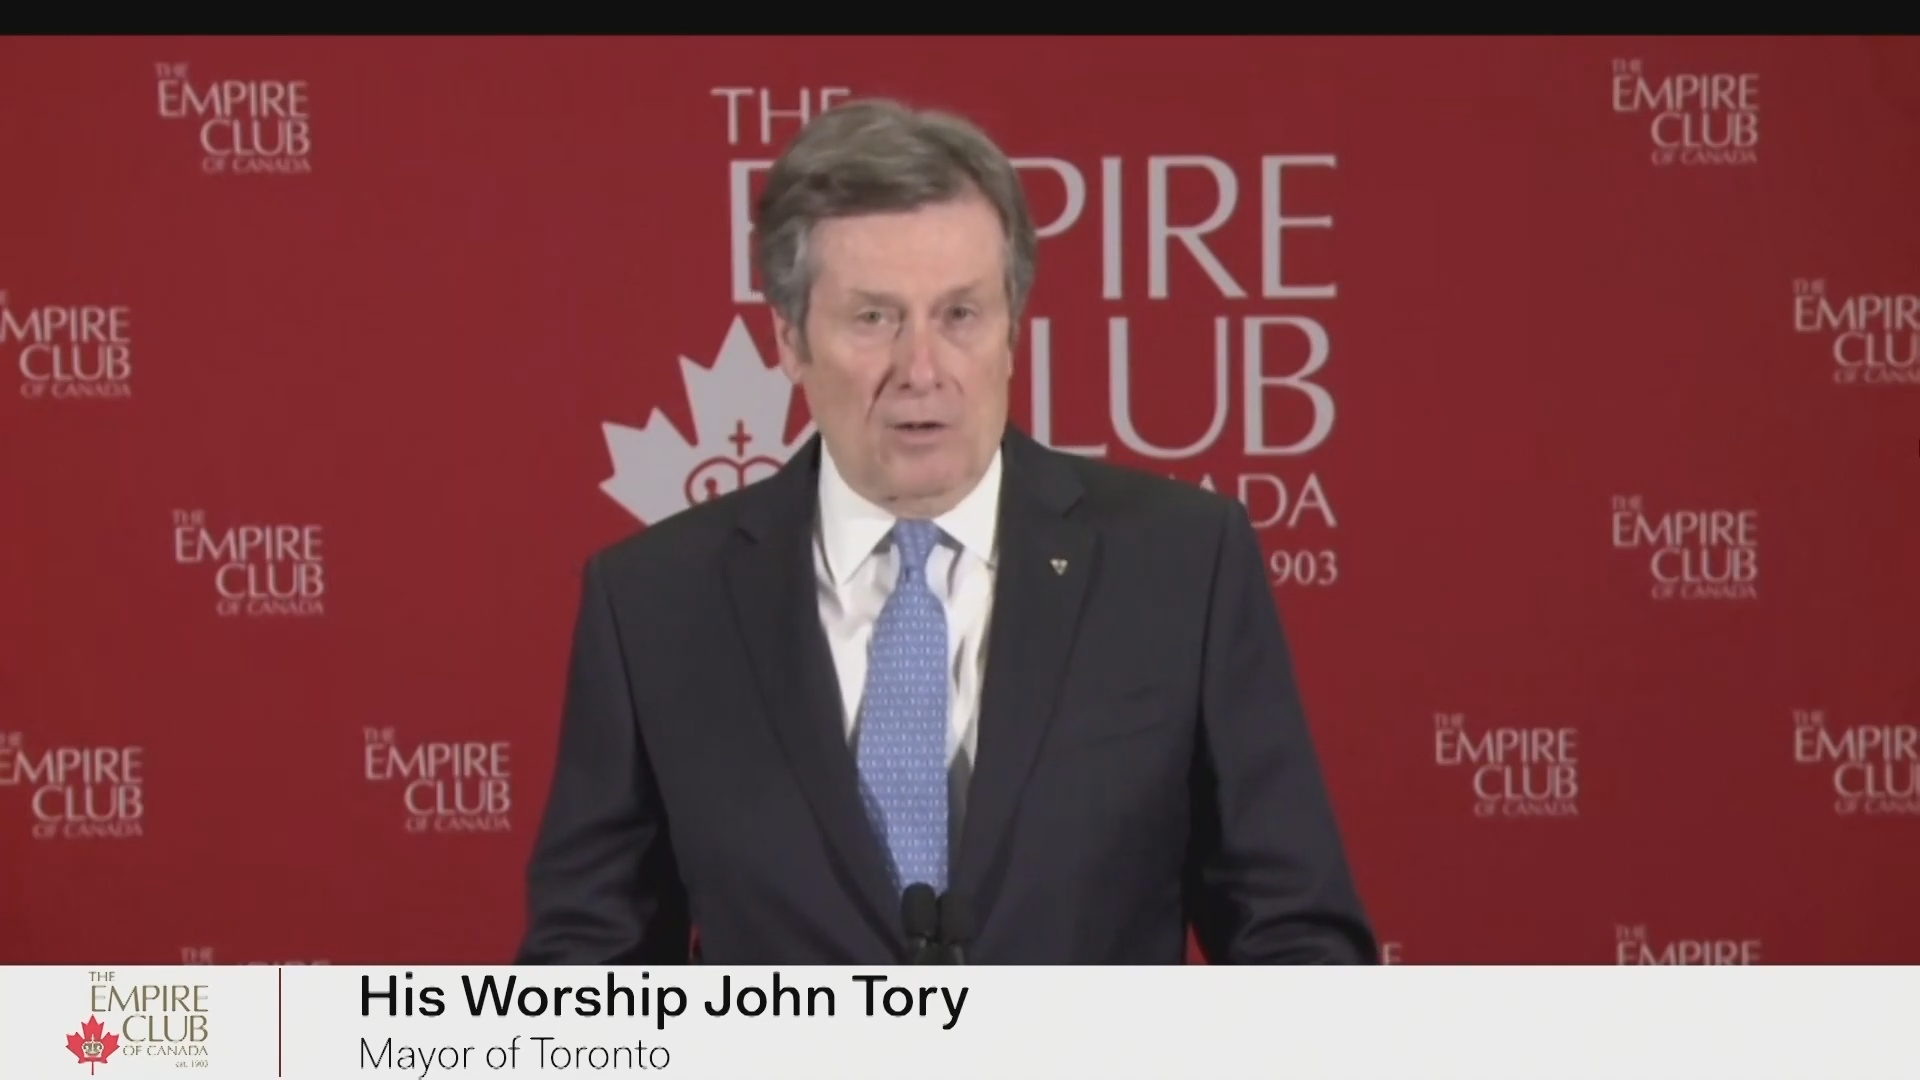 Mayor of Toronto, John Tory speaking at a virtual event